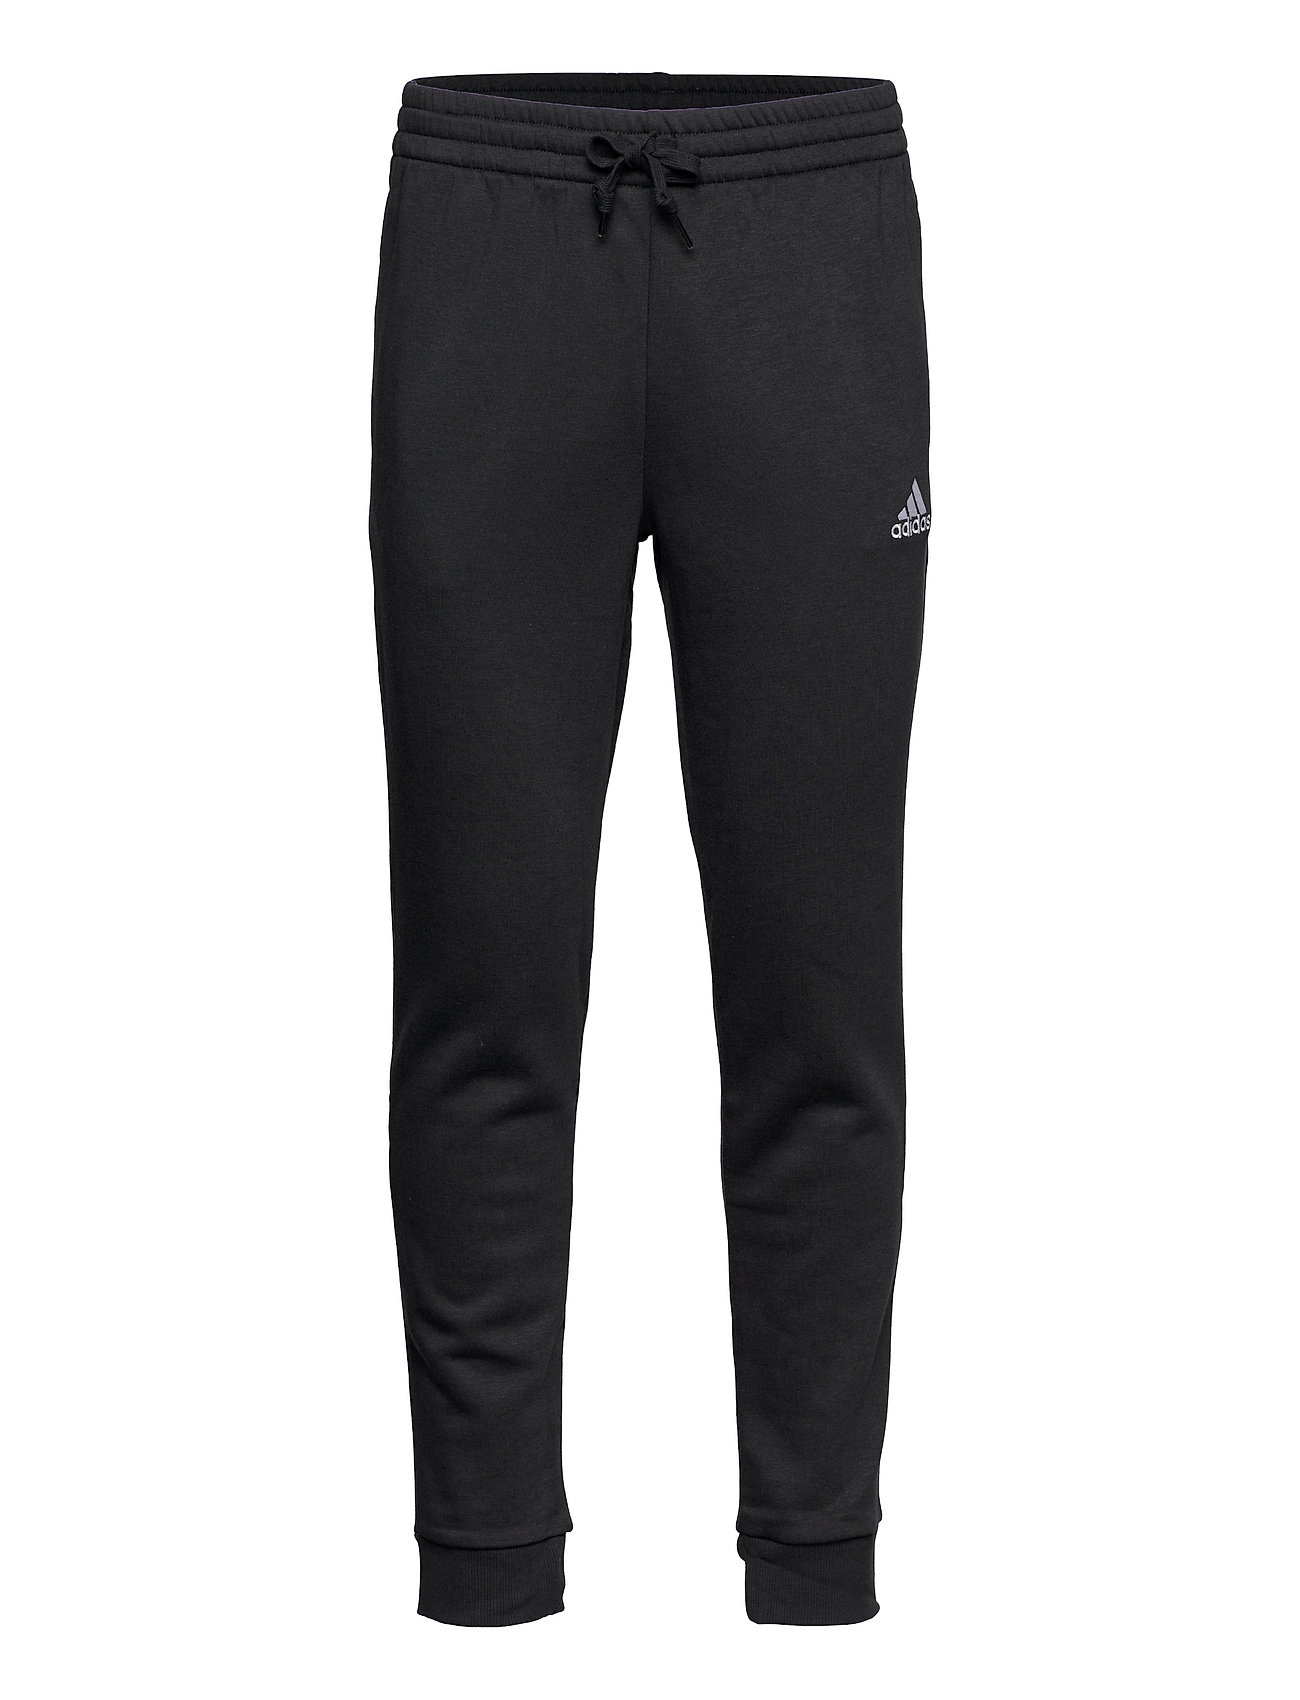 Essentials Fleece Regular Fit Tapered Cuff Pants Collegehousut Olohousut Musta Adidas Performance, adidas Performance